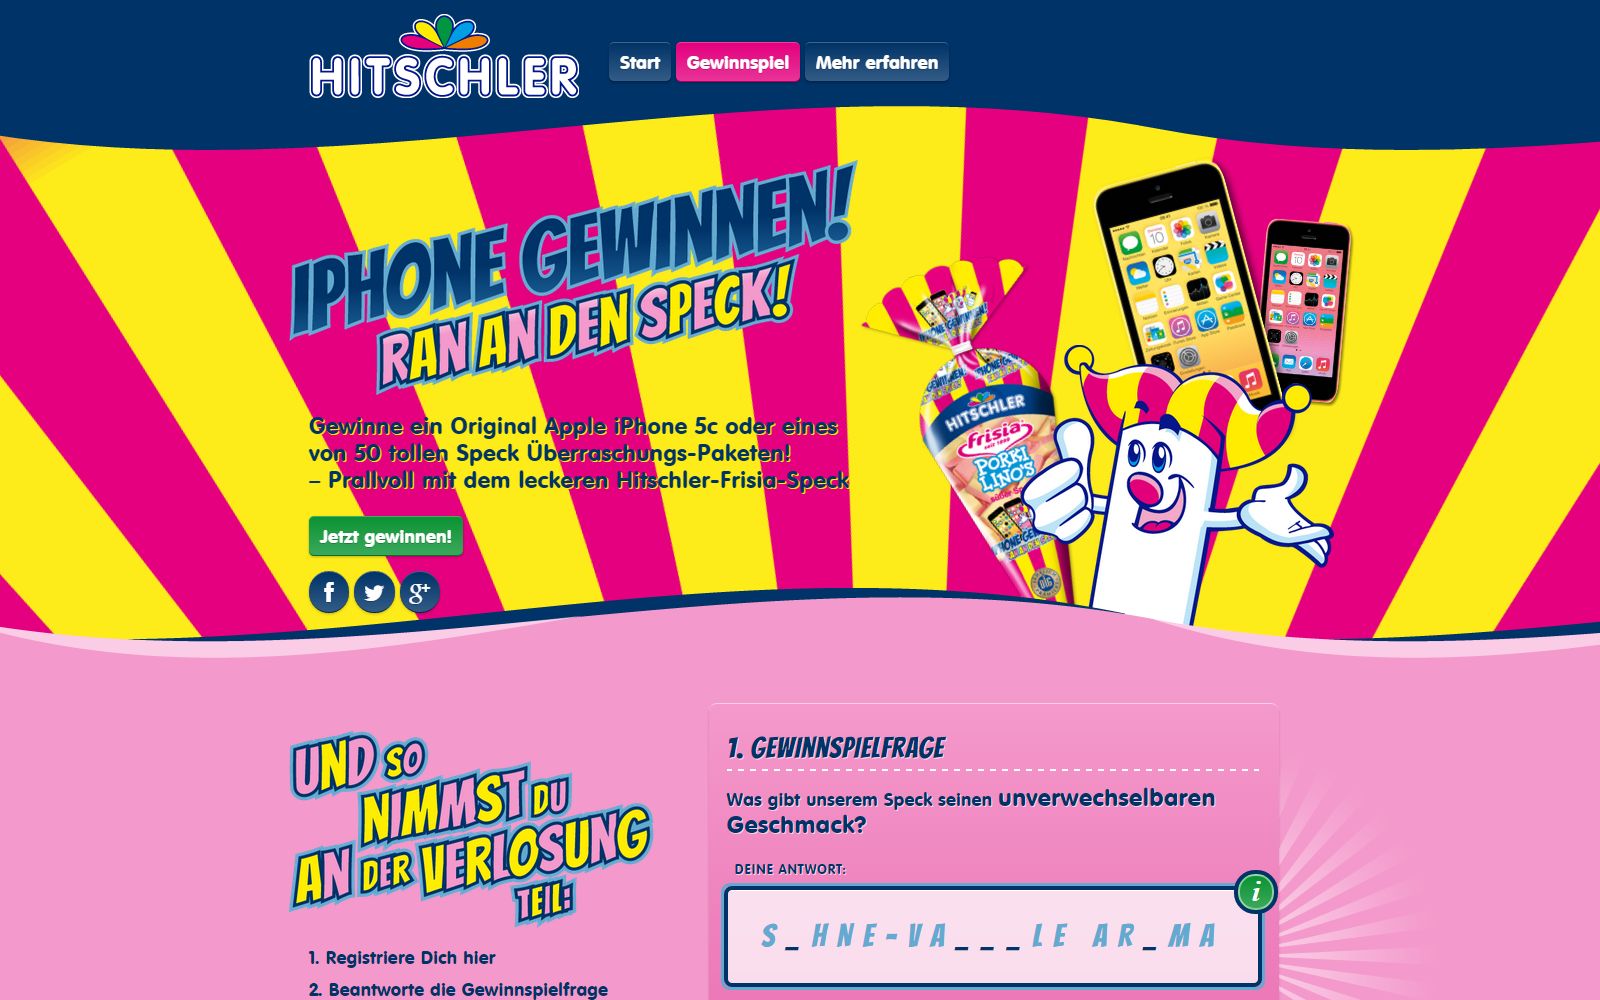 Hitschler – Microsite Speck Promotion